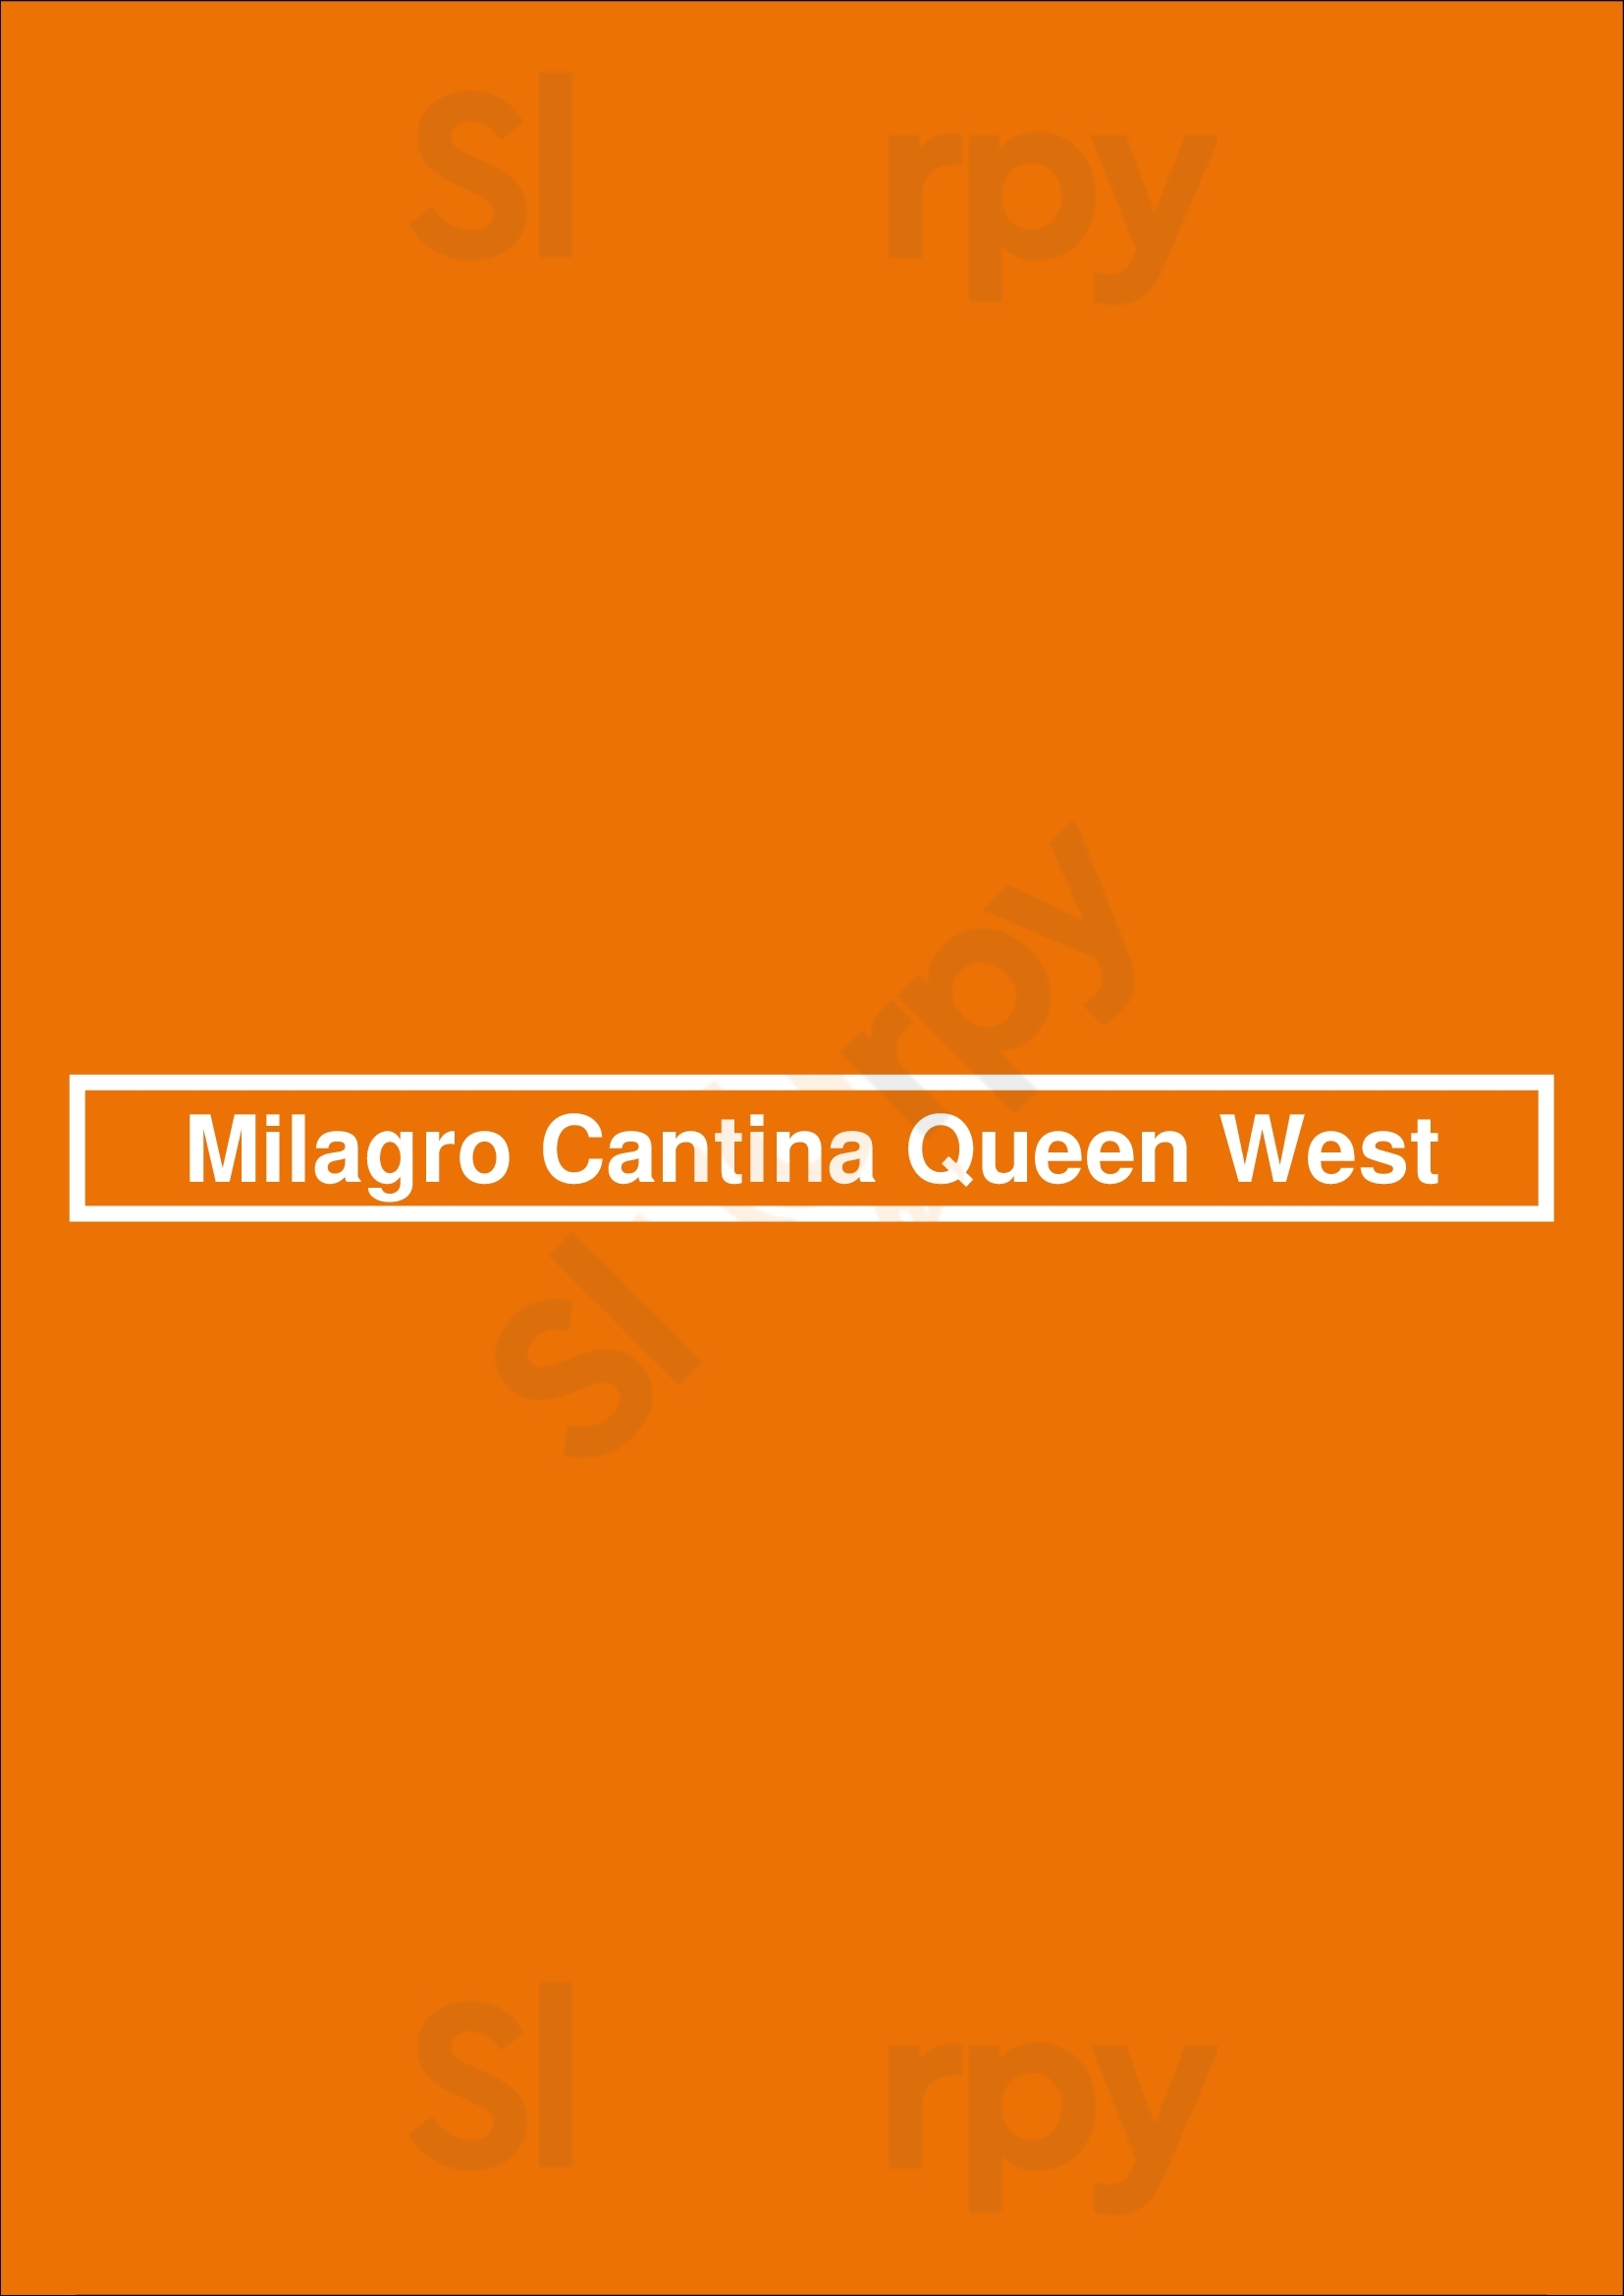 Milagro Cantina - Queen West Toronto Menu - 1